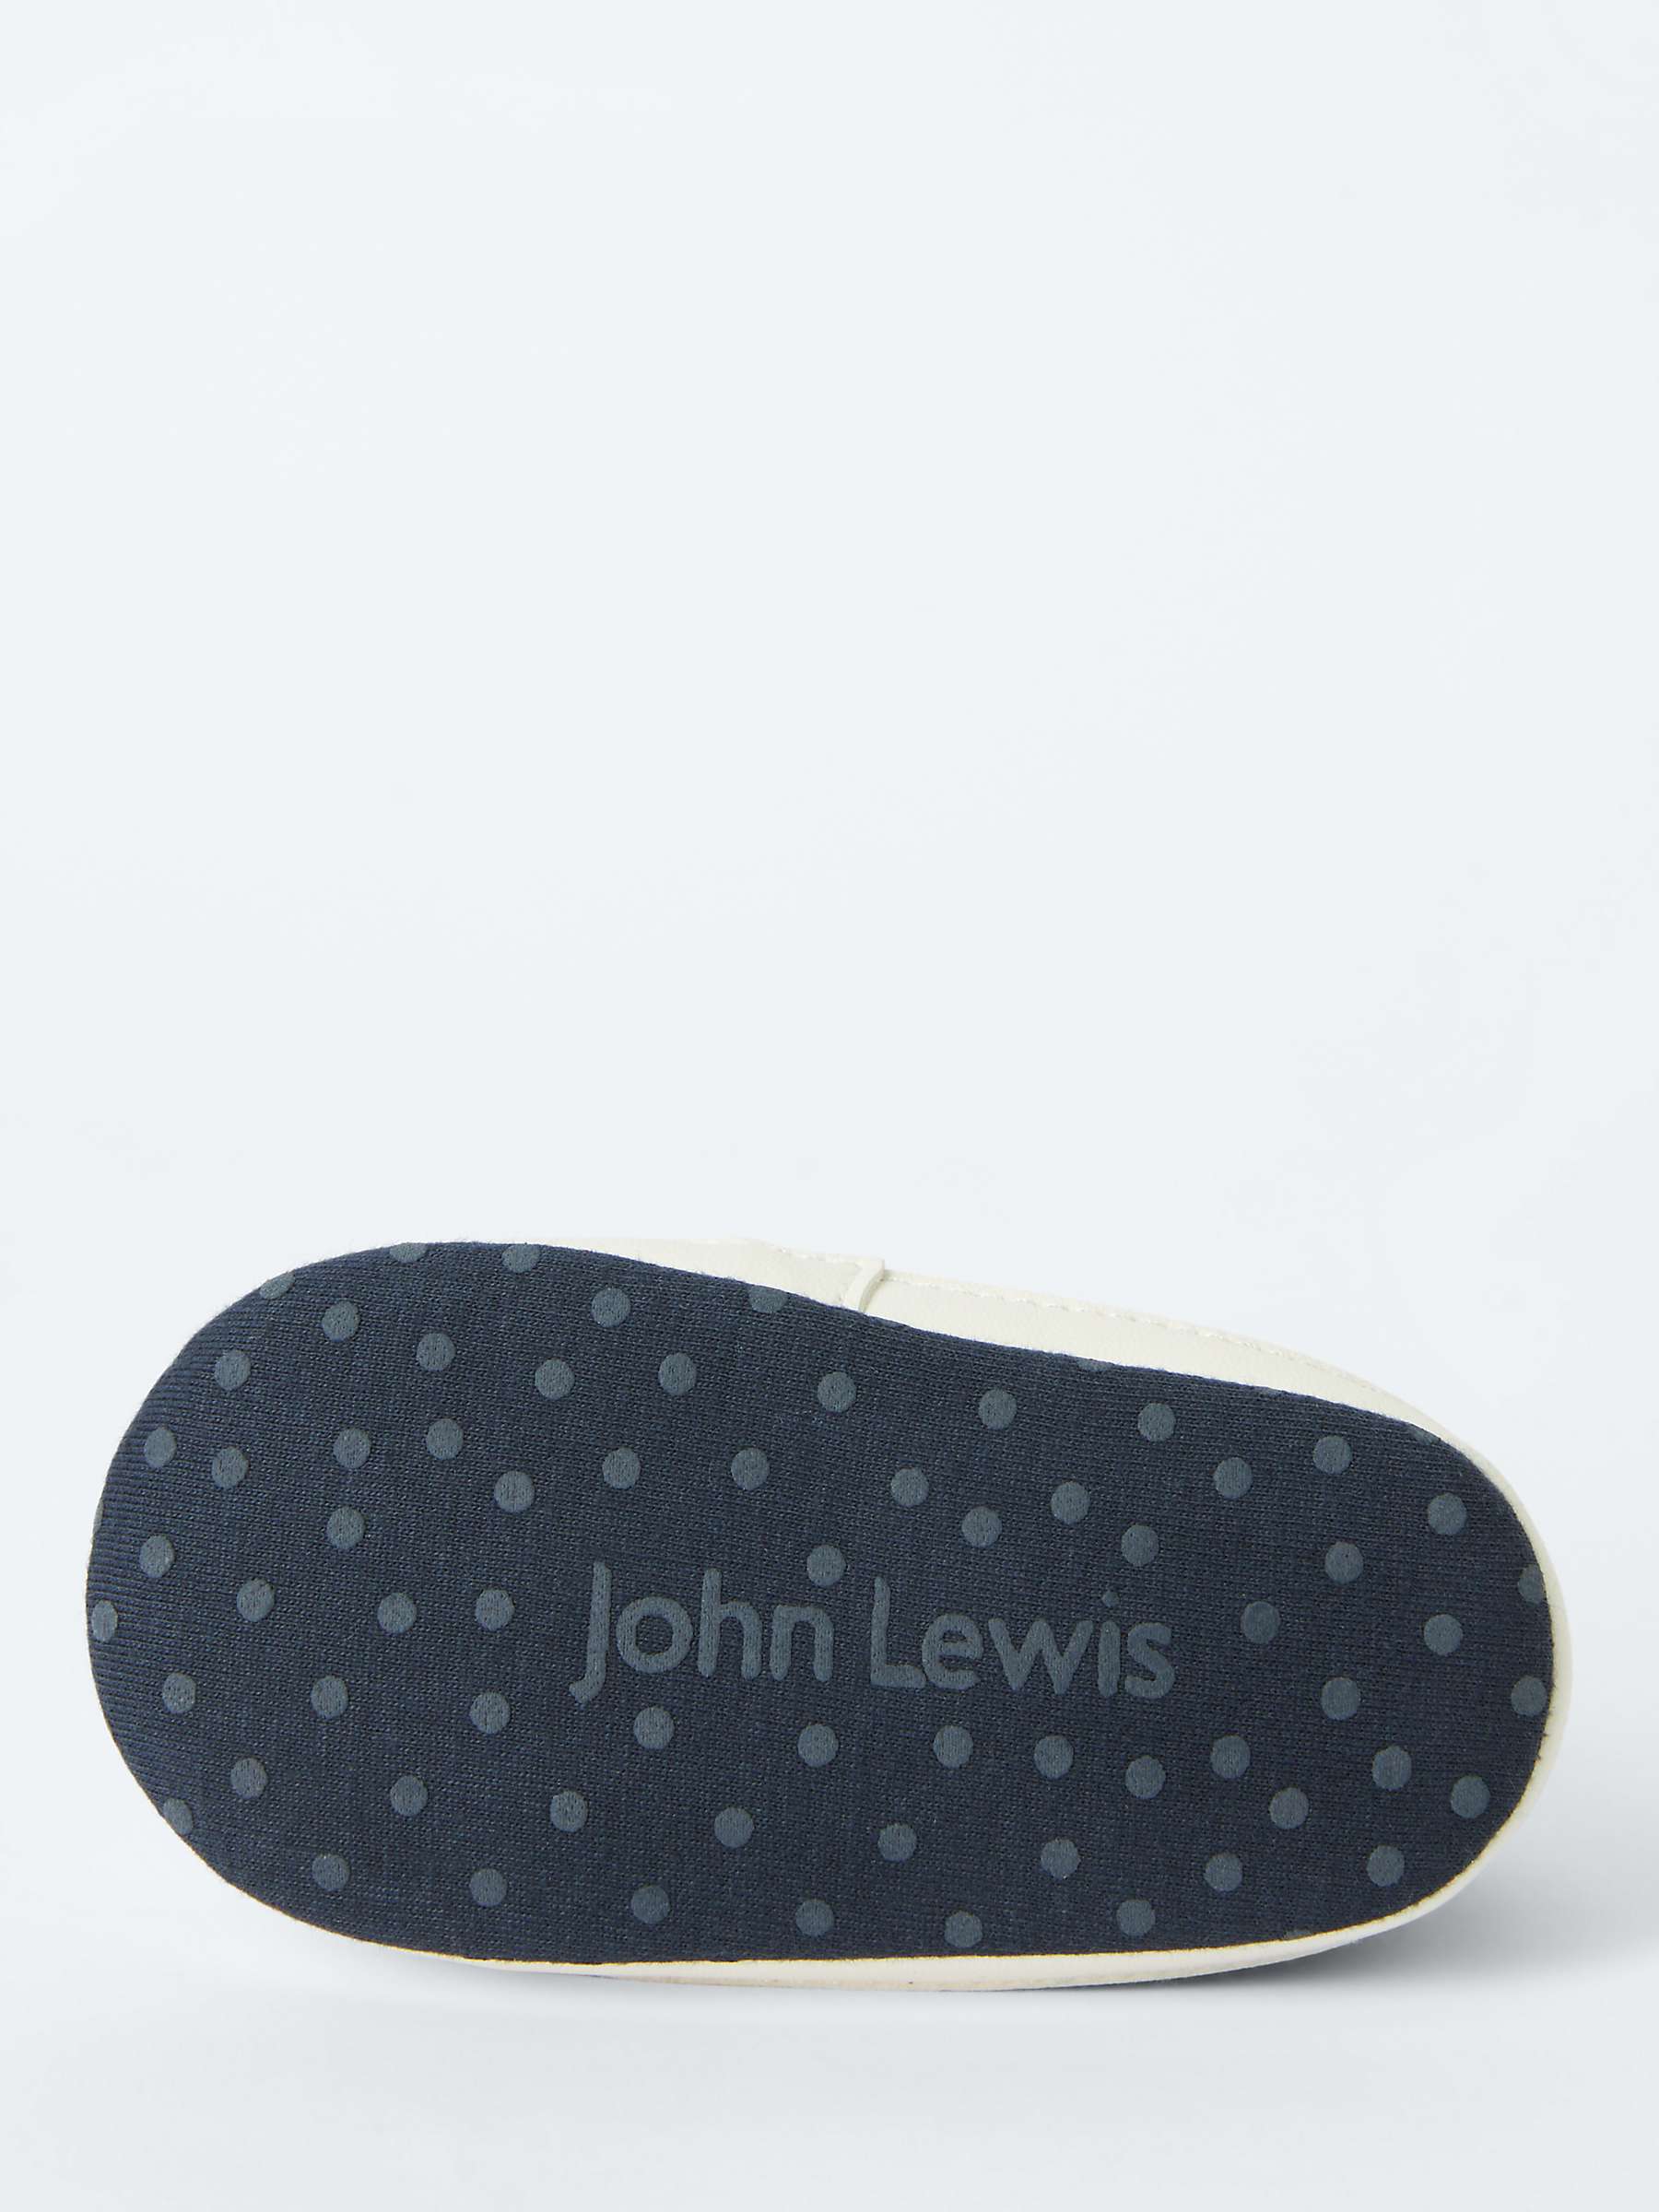 Buy John Lewis Hi-Top Canvas Baby Booties, Charcoal Online at johnlewis.com